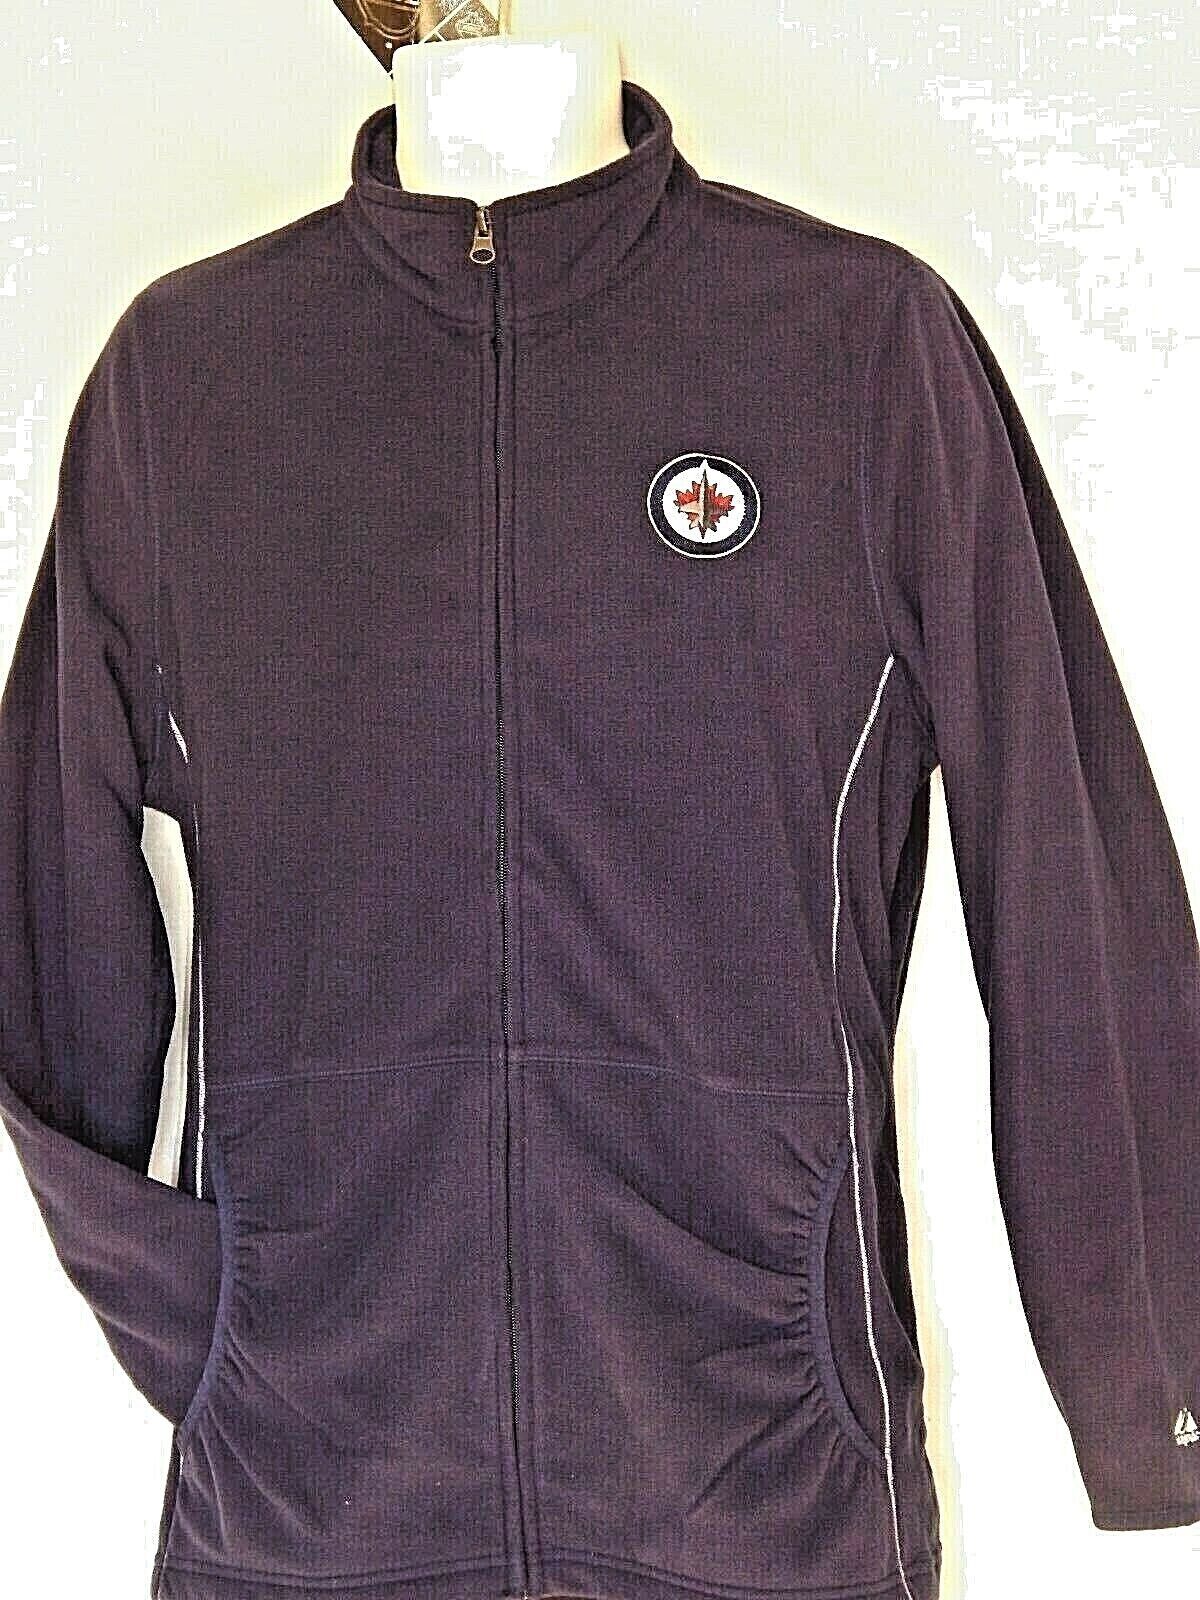 Primary image for Women's Jacket Winnipeg Jets Fleece Zip up Size Large NEW Majestic NHL Coat